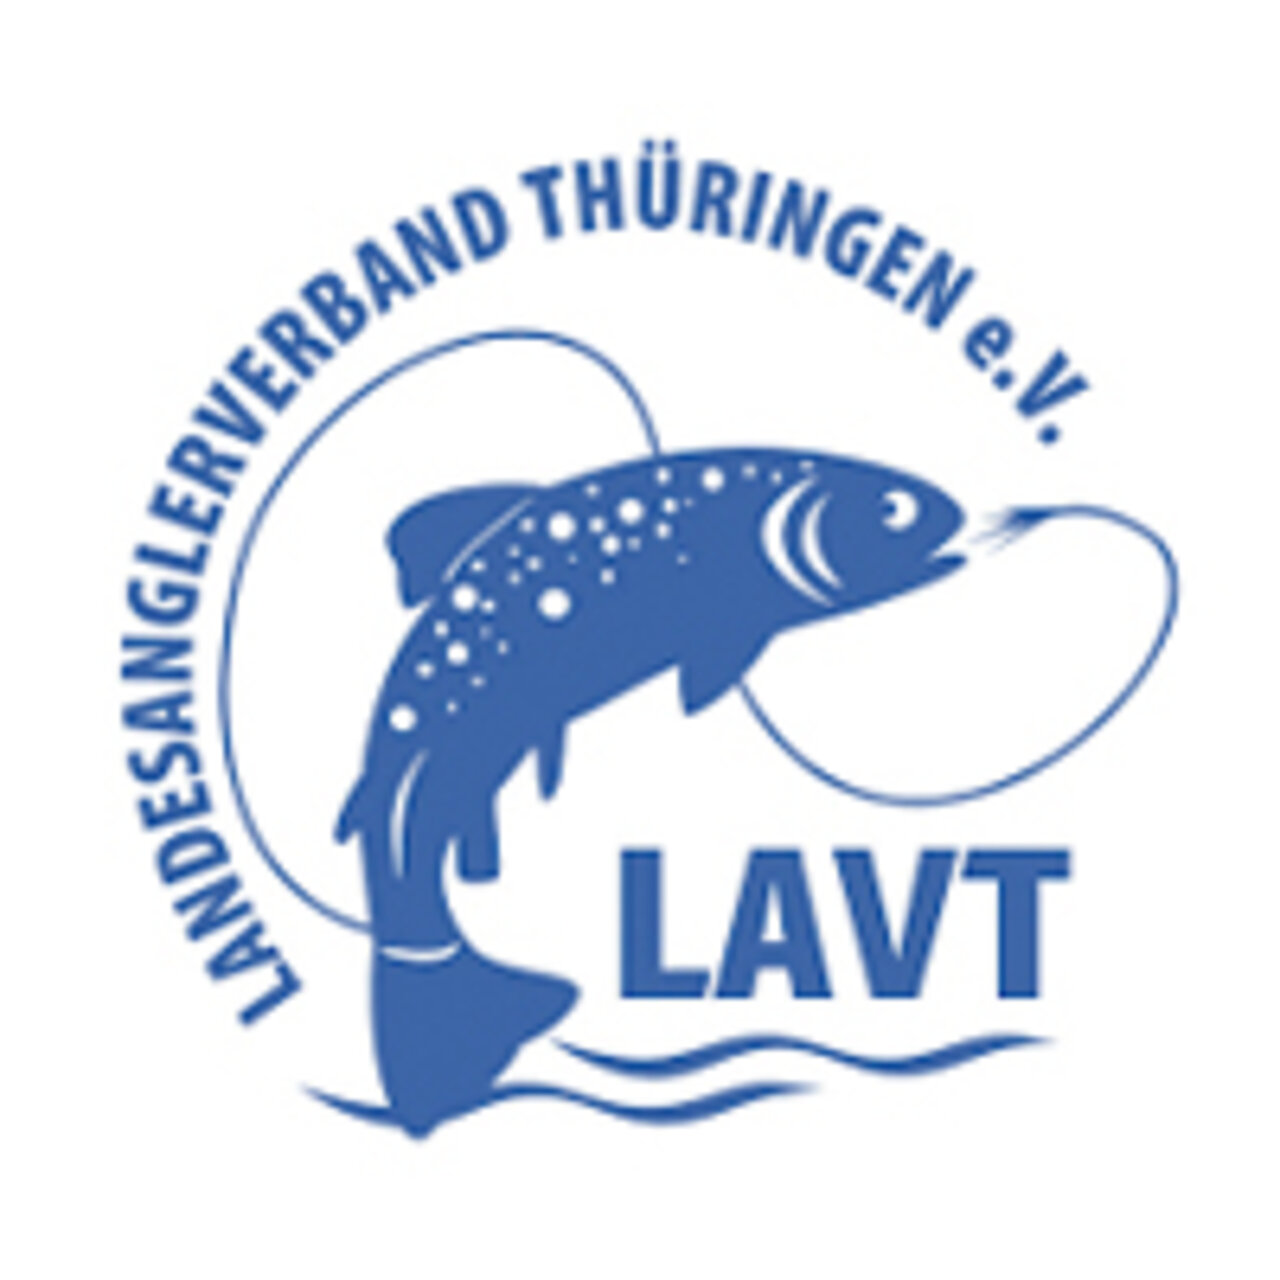 Verbandslogo Landesanglerverband Thüringen e.V.